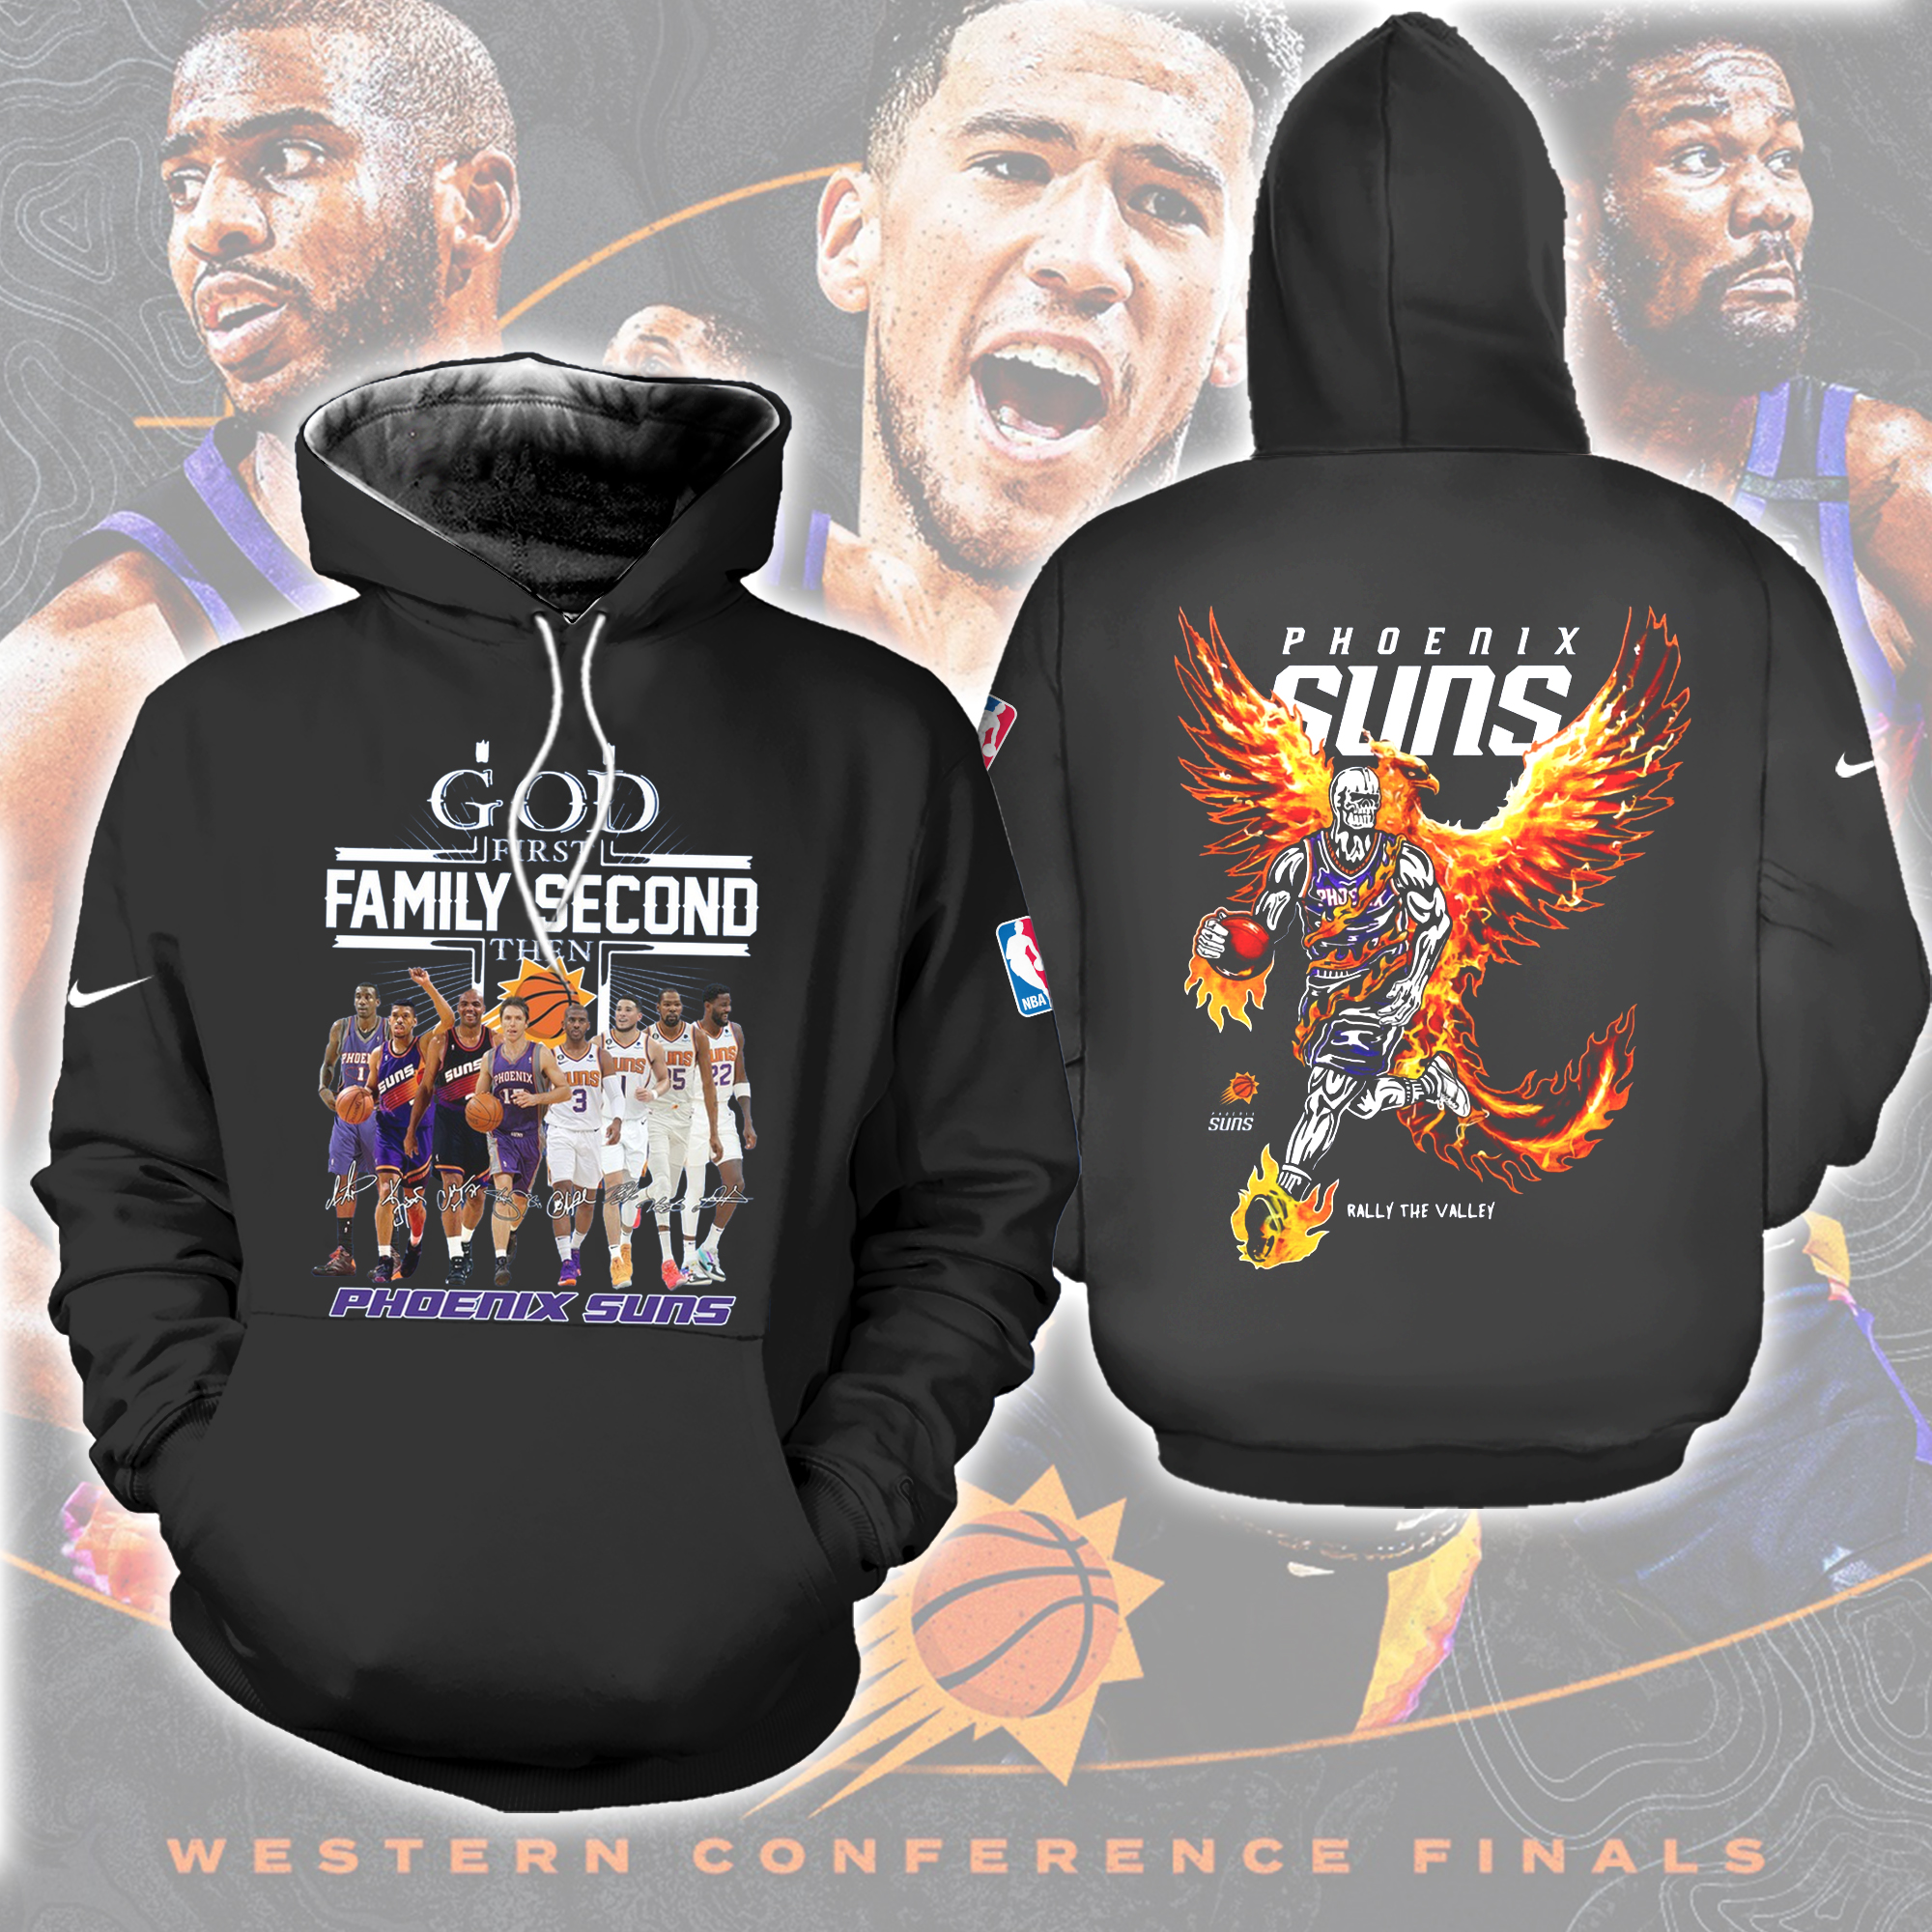 Nike Phoenix Suns Men's Nike NBA Playoff Mantra 2023 T-Shirt. Nike